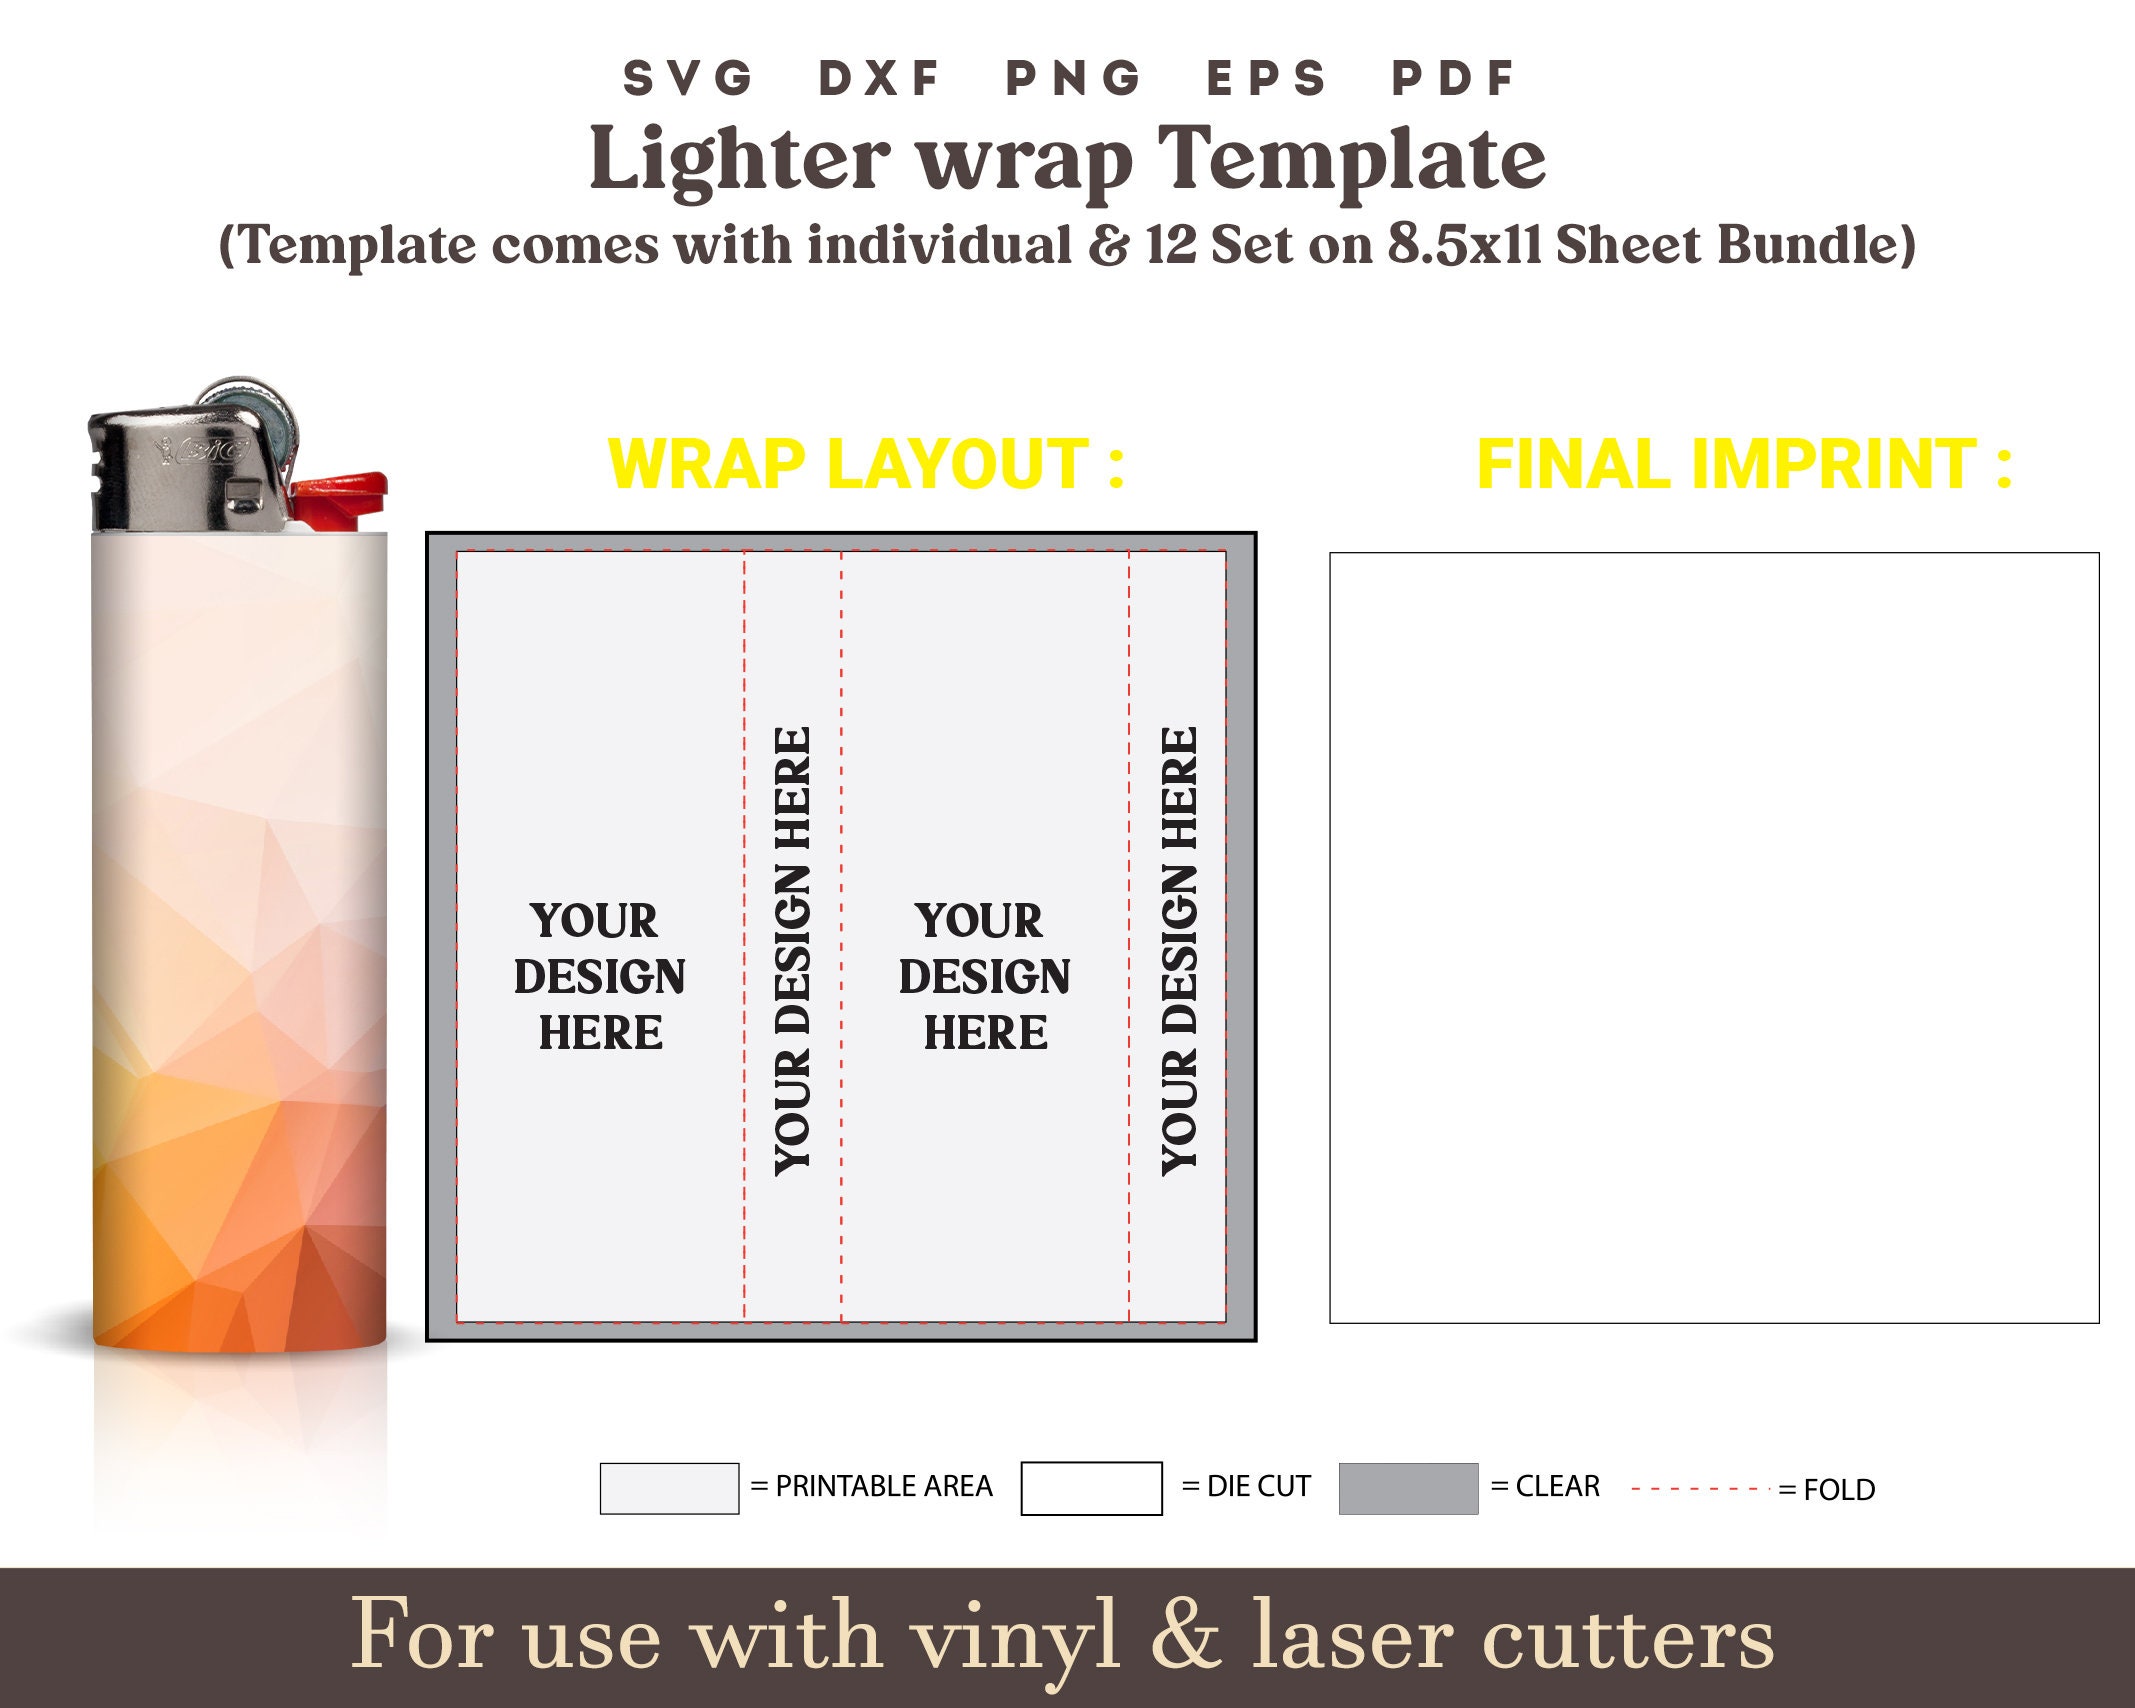 bic-lighter-wrap-template